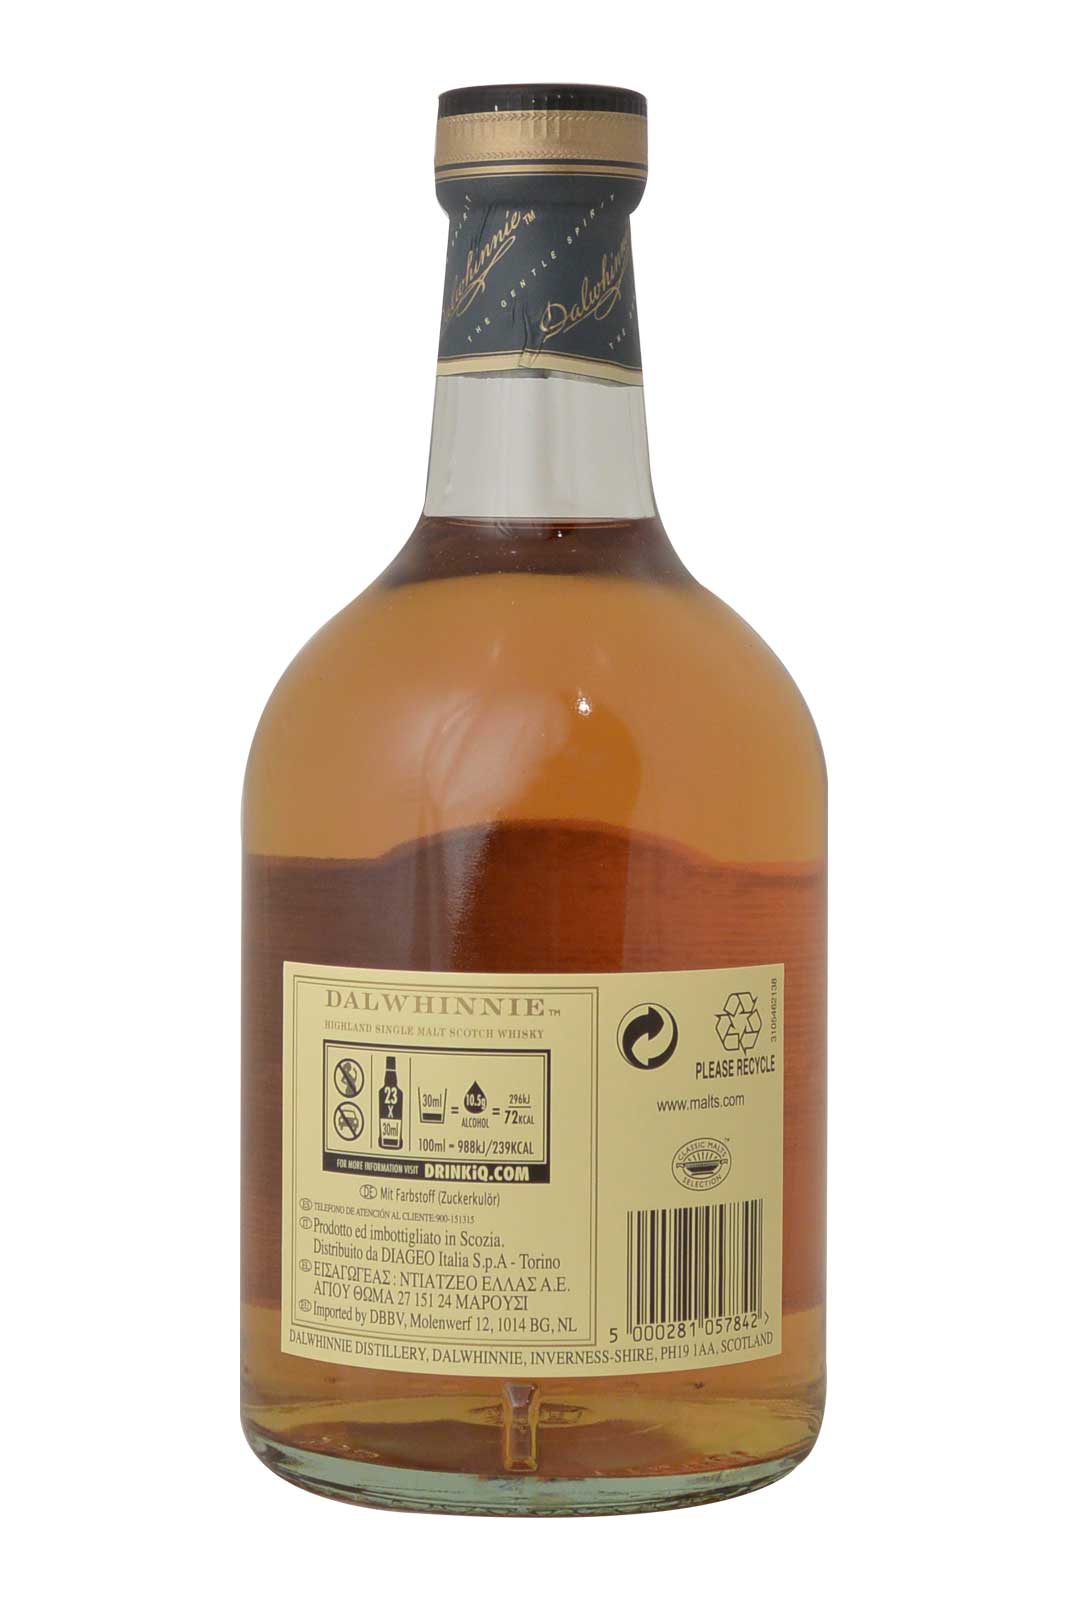 Dalwhinnie Distillers Edition Gold Distilled 2004 Bottled 2019